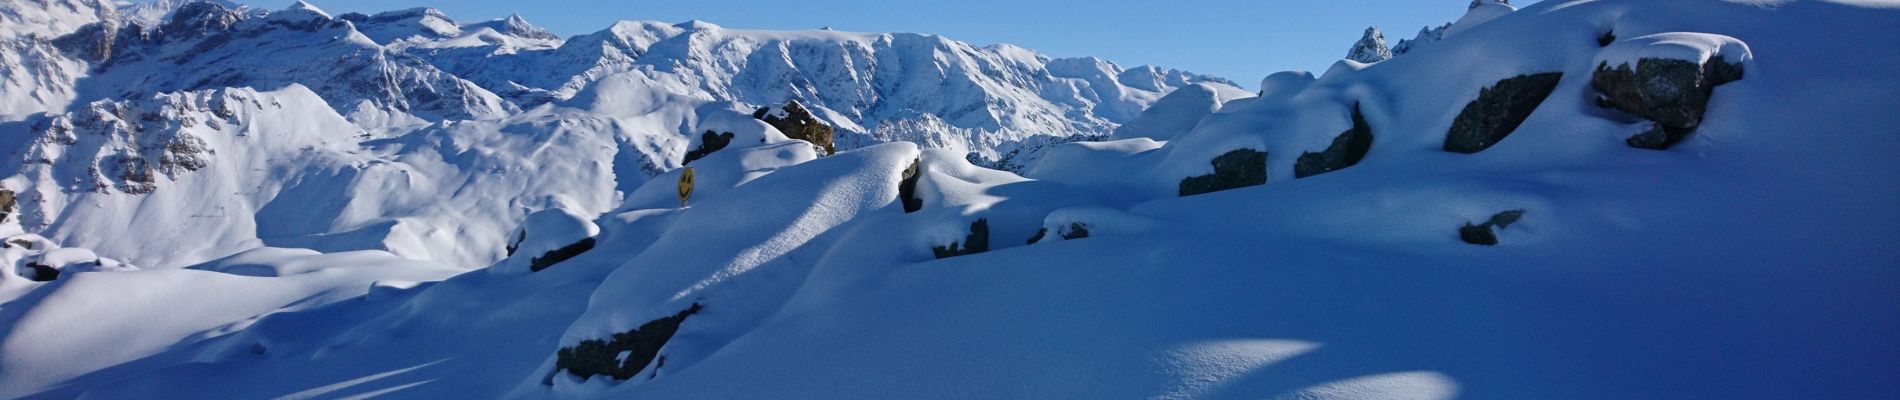 Trail Touring skiing Courchevel - creux noir - Photo